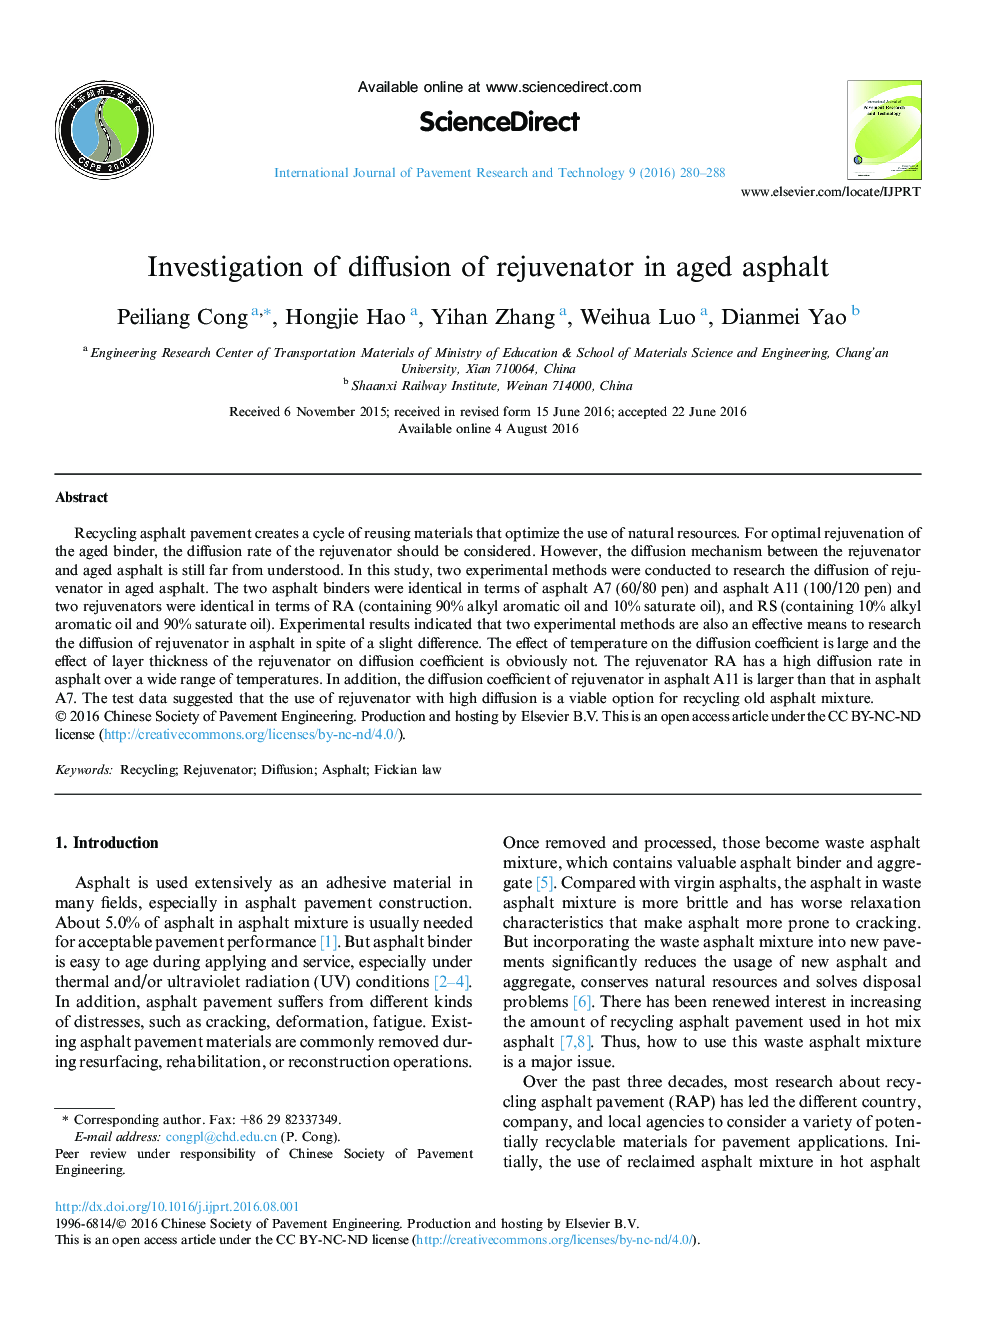 Investigation of diffusion of rejuvenator in aged asphalt